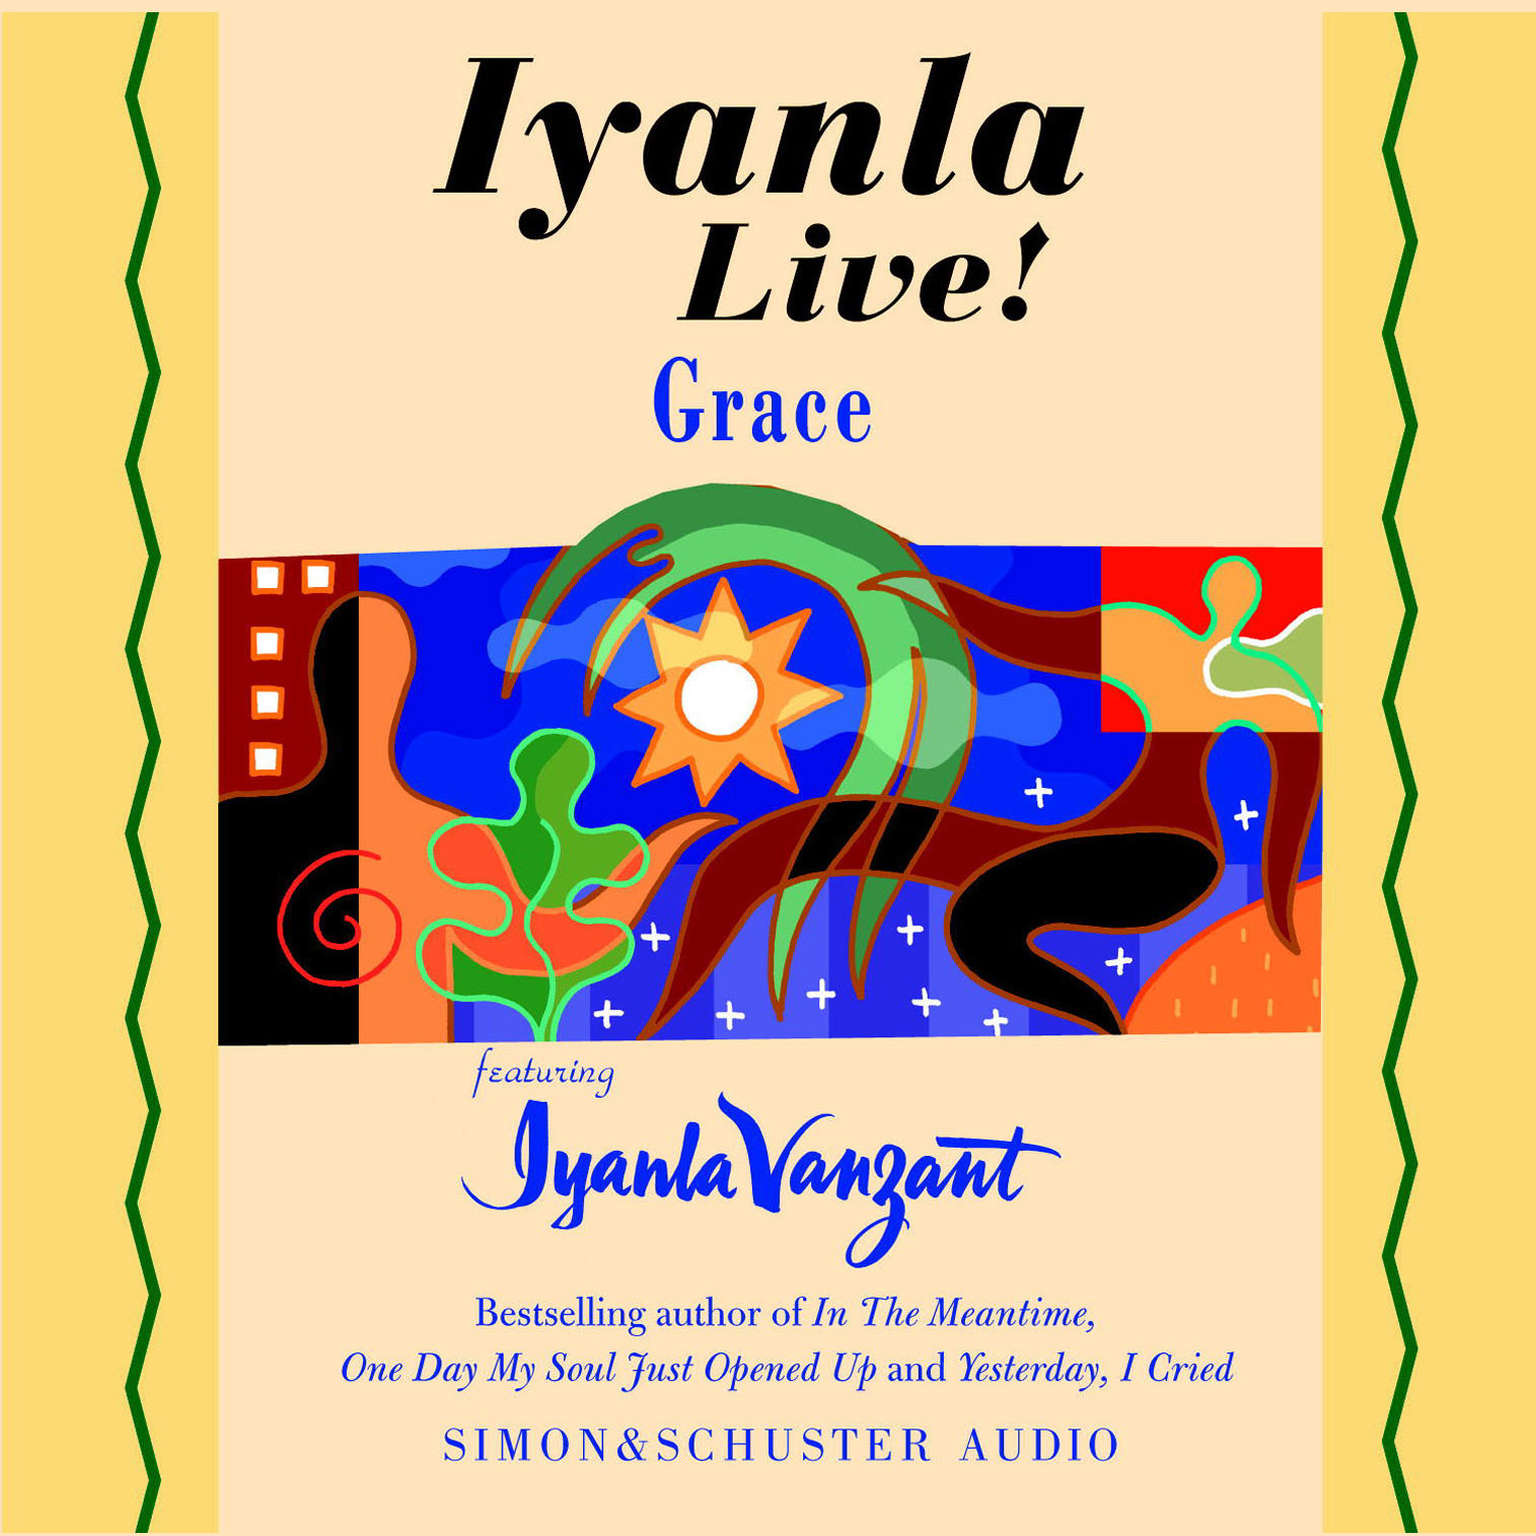 Iyanla Live! Grace (Abridged) Audiobook, by Iyanla Vanzant